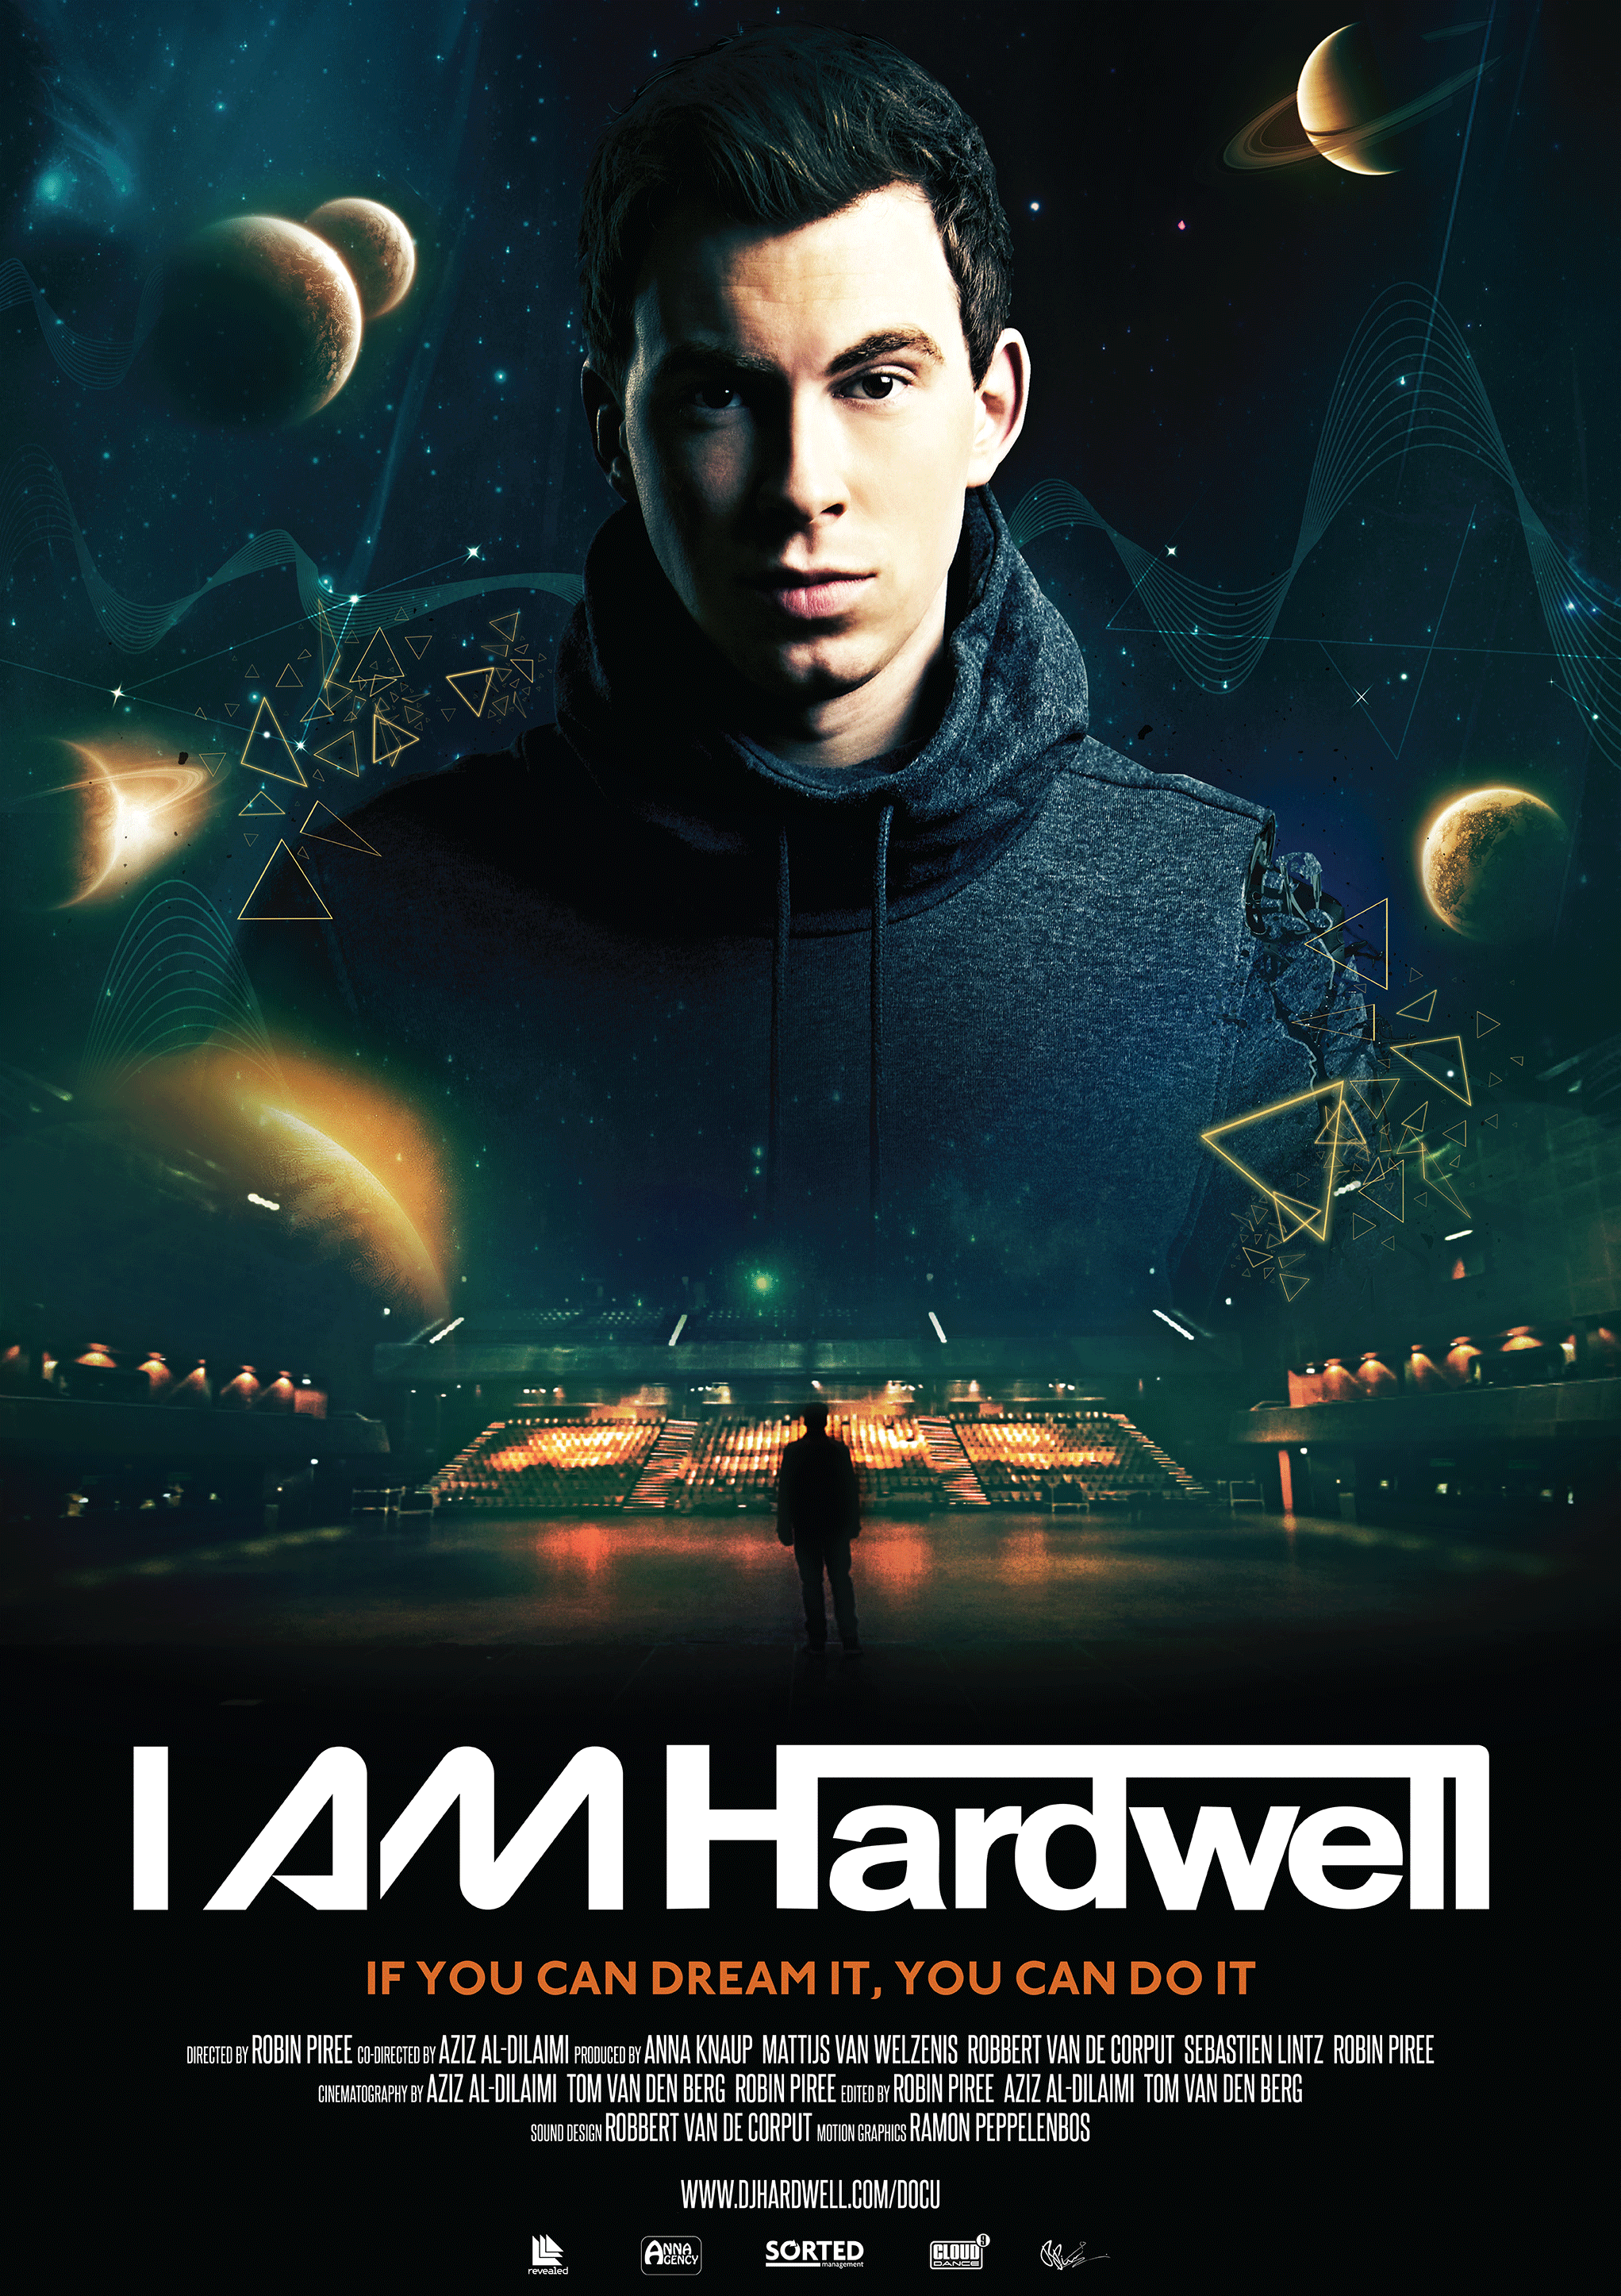 Hardwell, Robbert Van De Corput, DJ, Music, I AM Hardwell, Poster